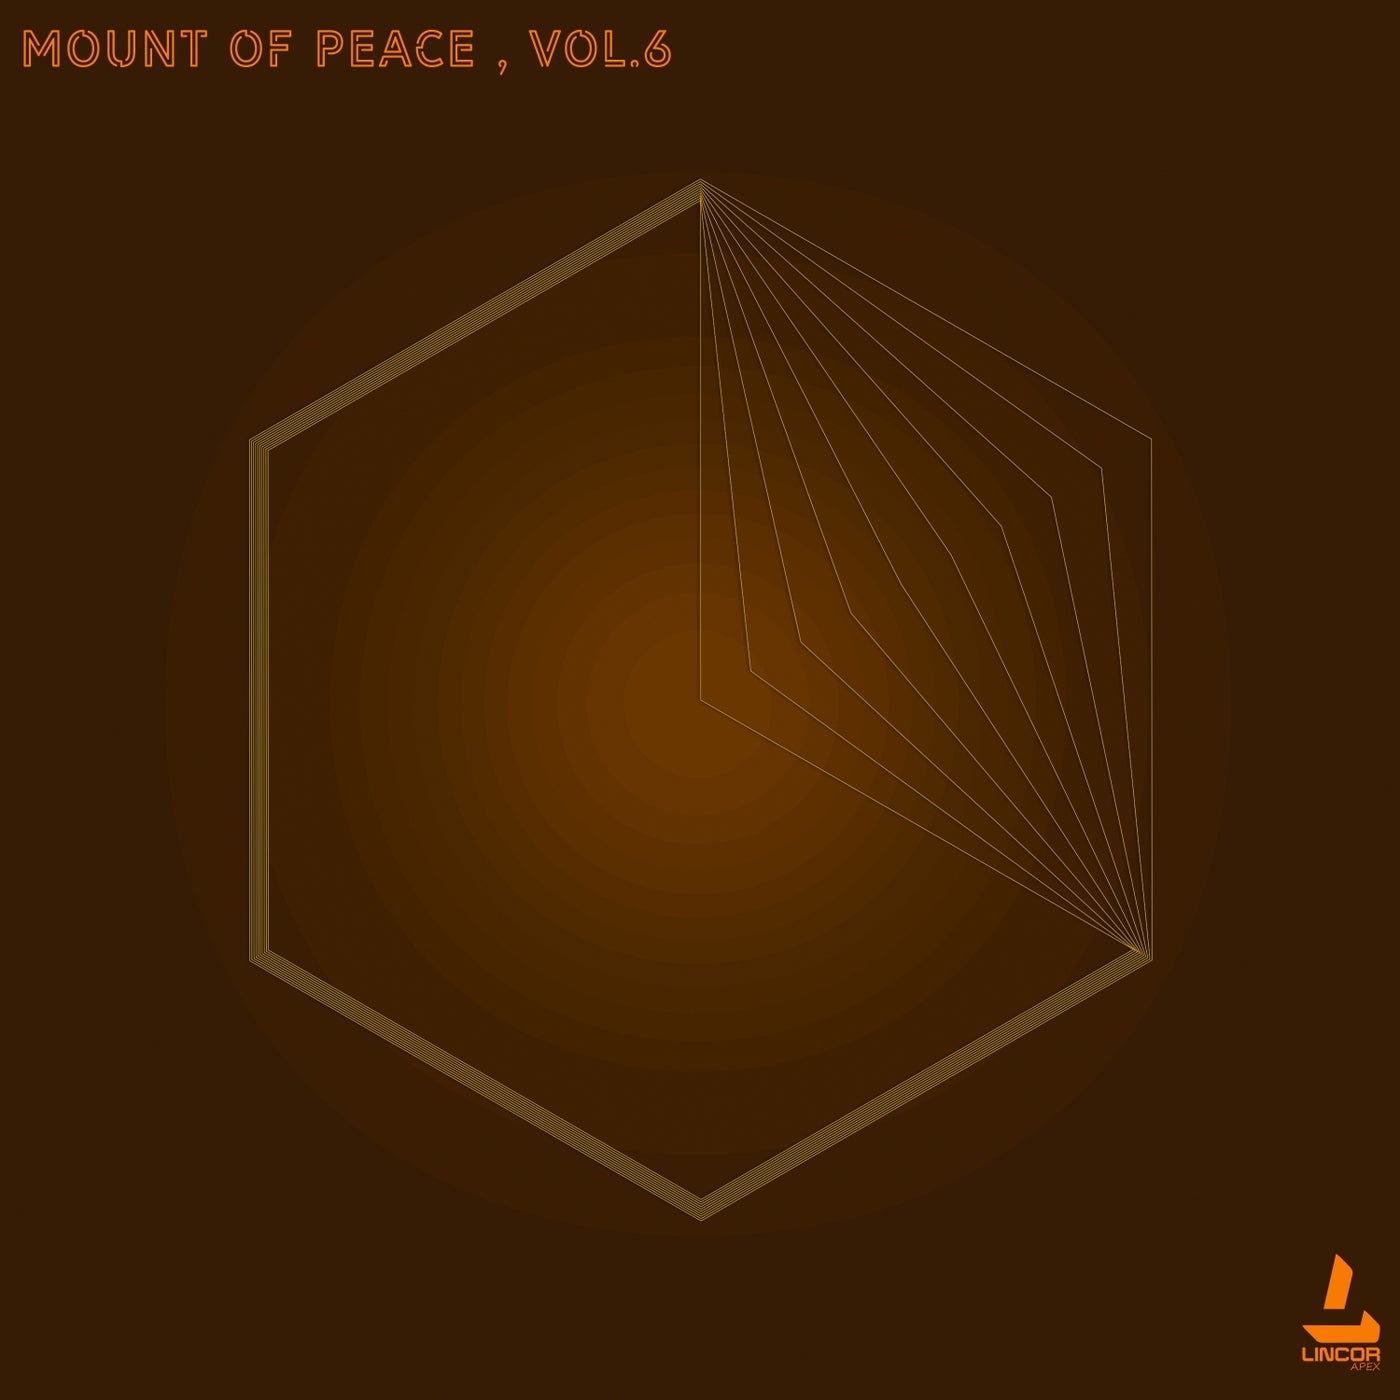 Mount of Peace, Vol. 6